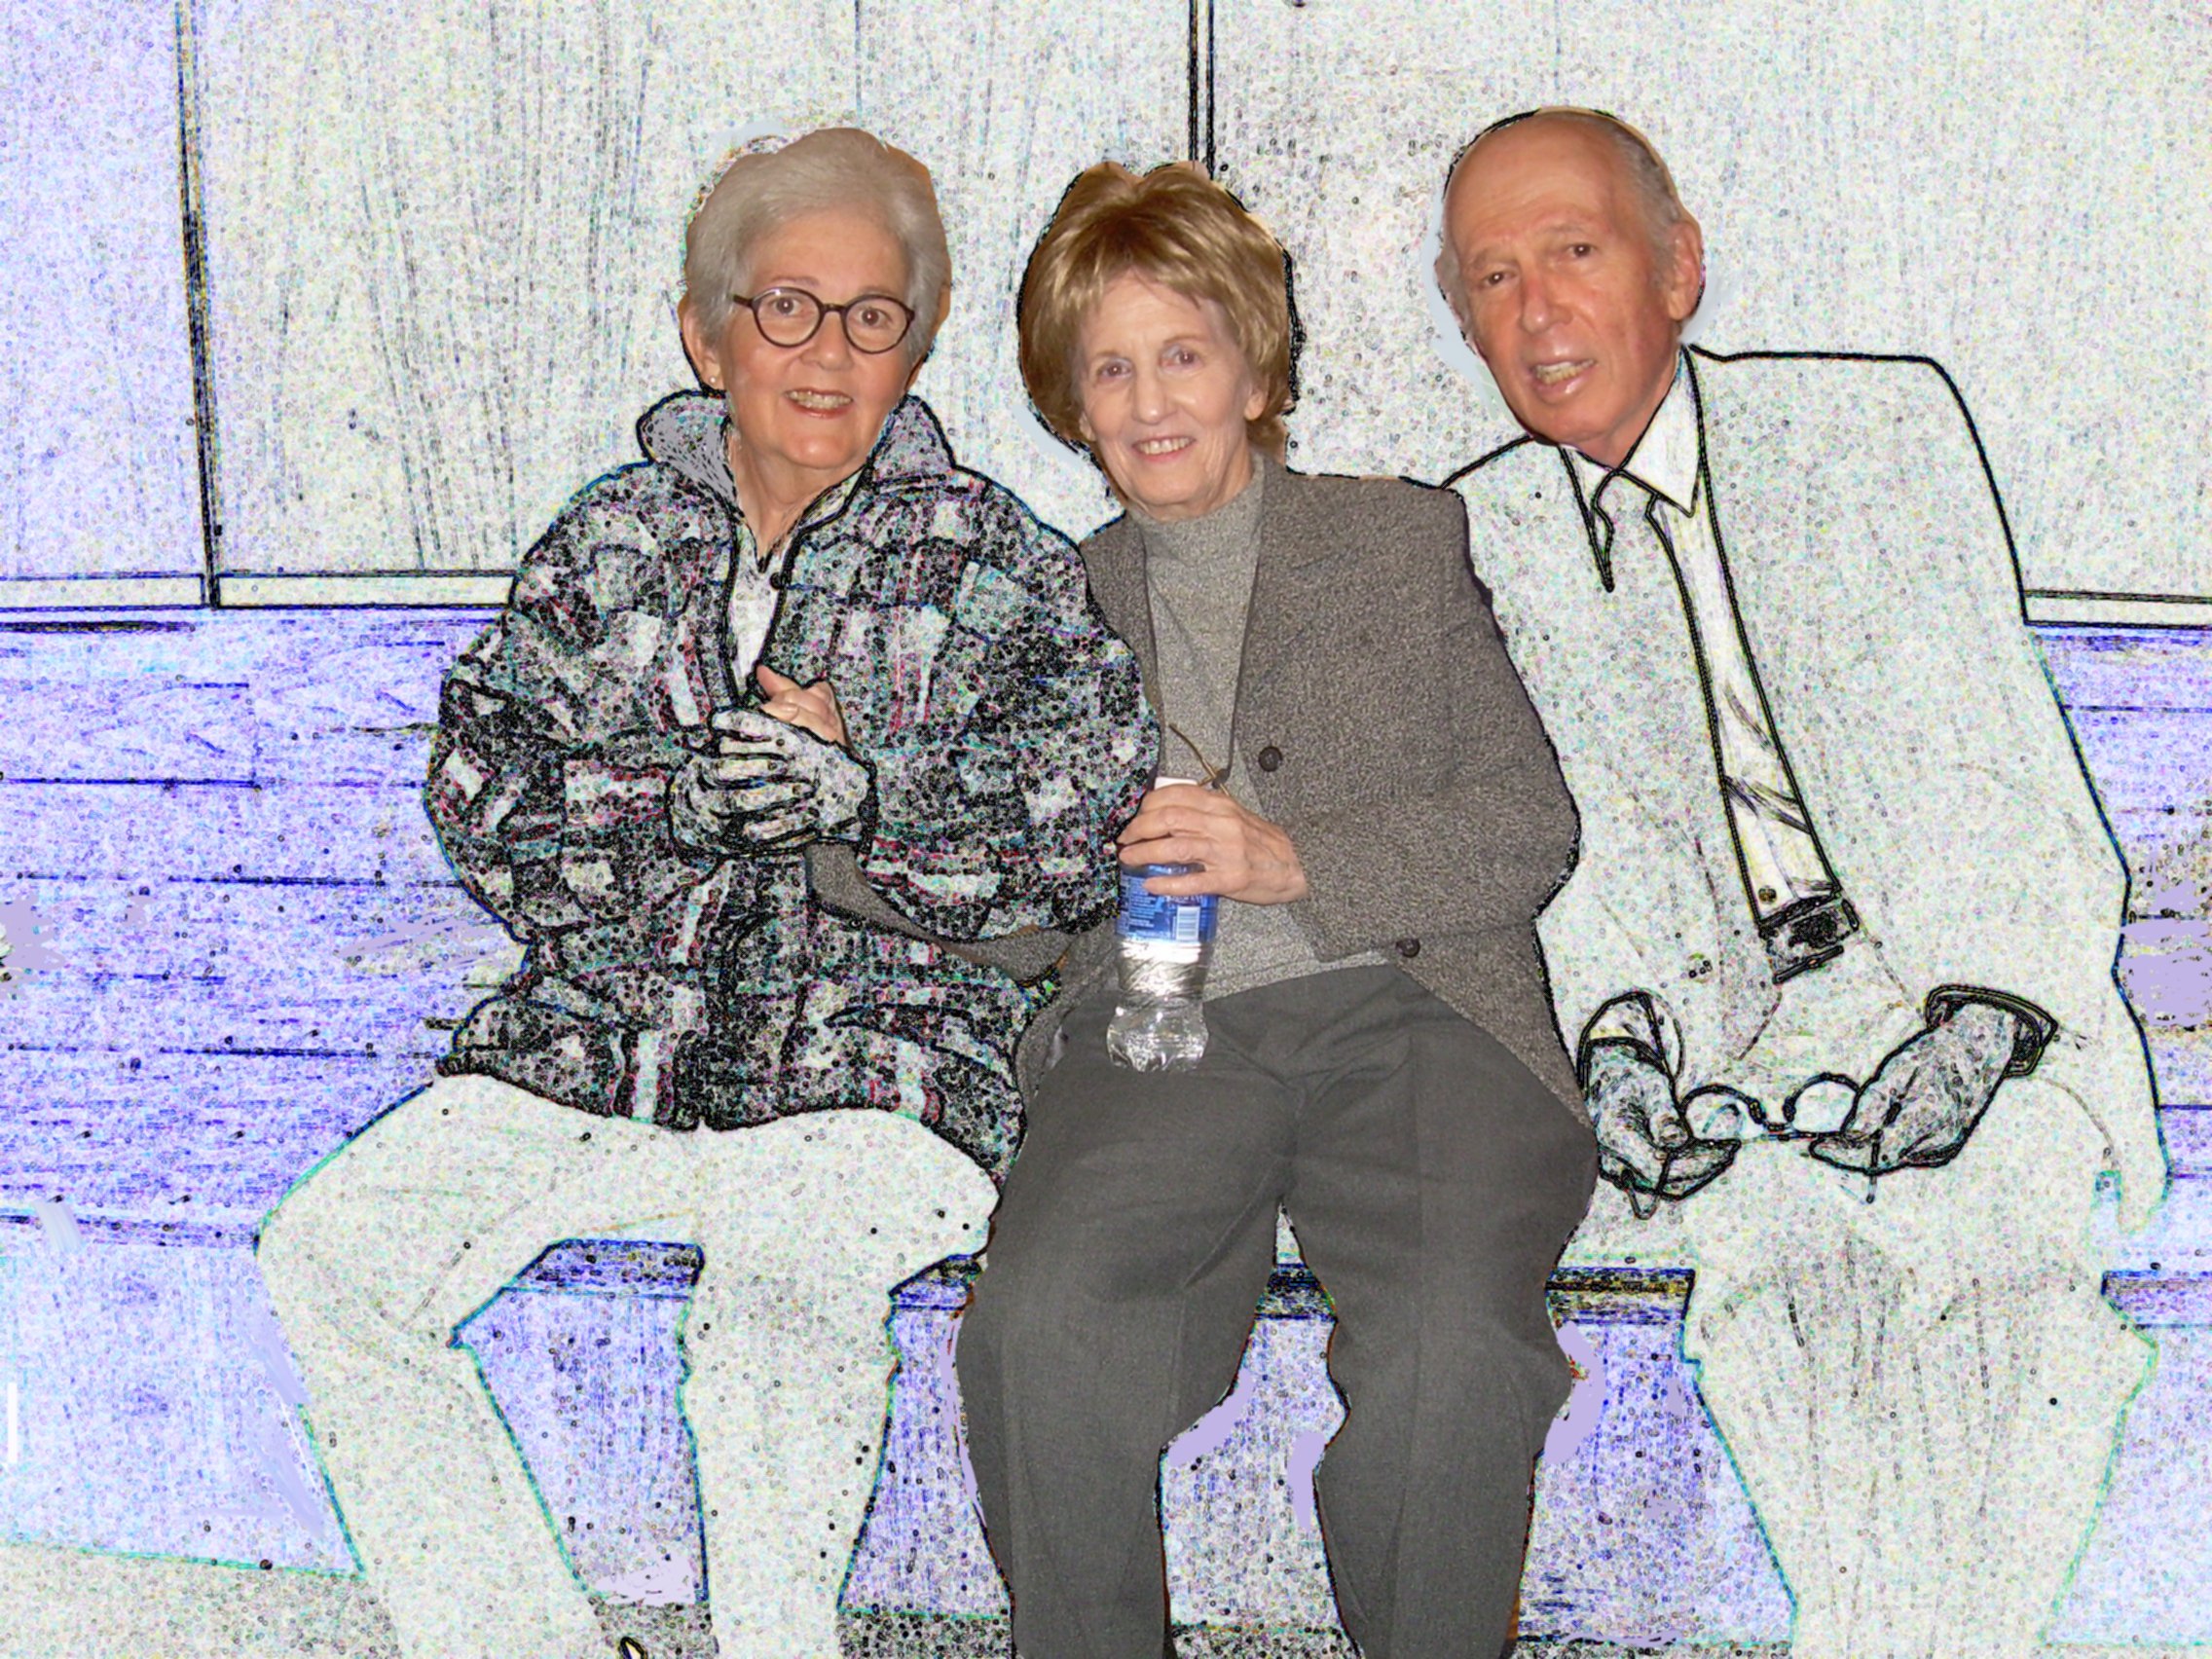   Barbara Leif, Linda Levi, Ron Leif At the laddies Wedding, Beverly Hills, 2014.  